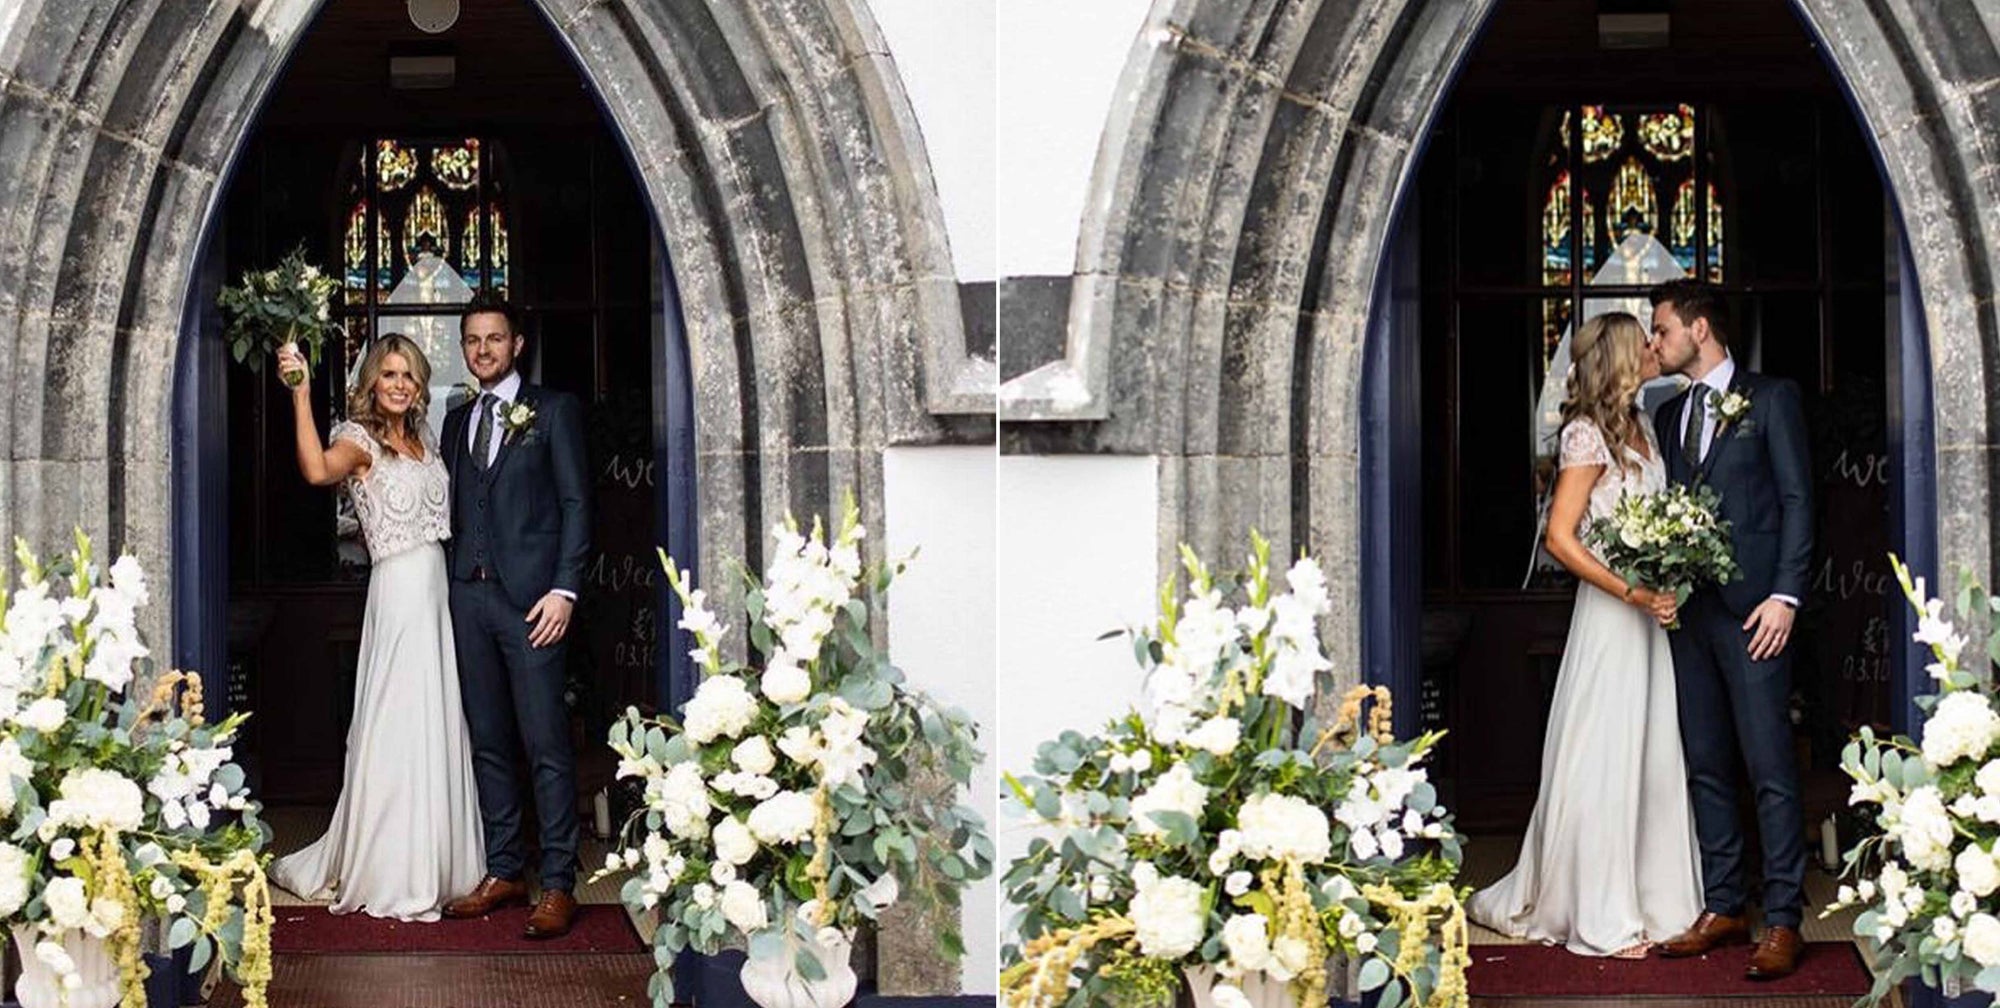 First pics of Ailbhe Garrihy's wedding to long-term boyfriend Ruaidhri Hehir